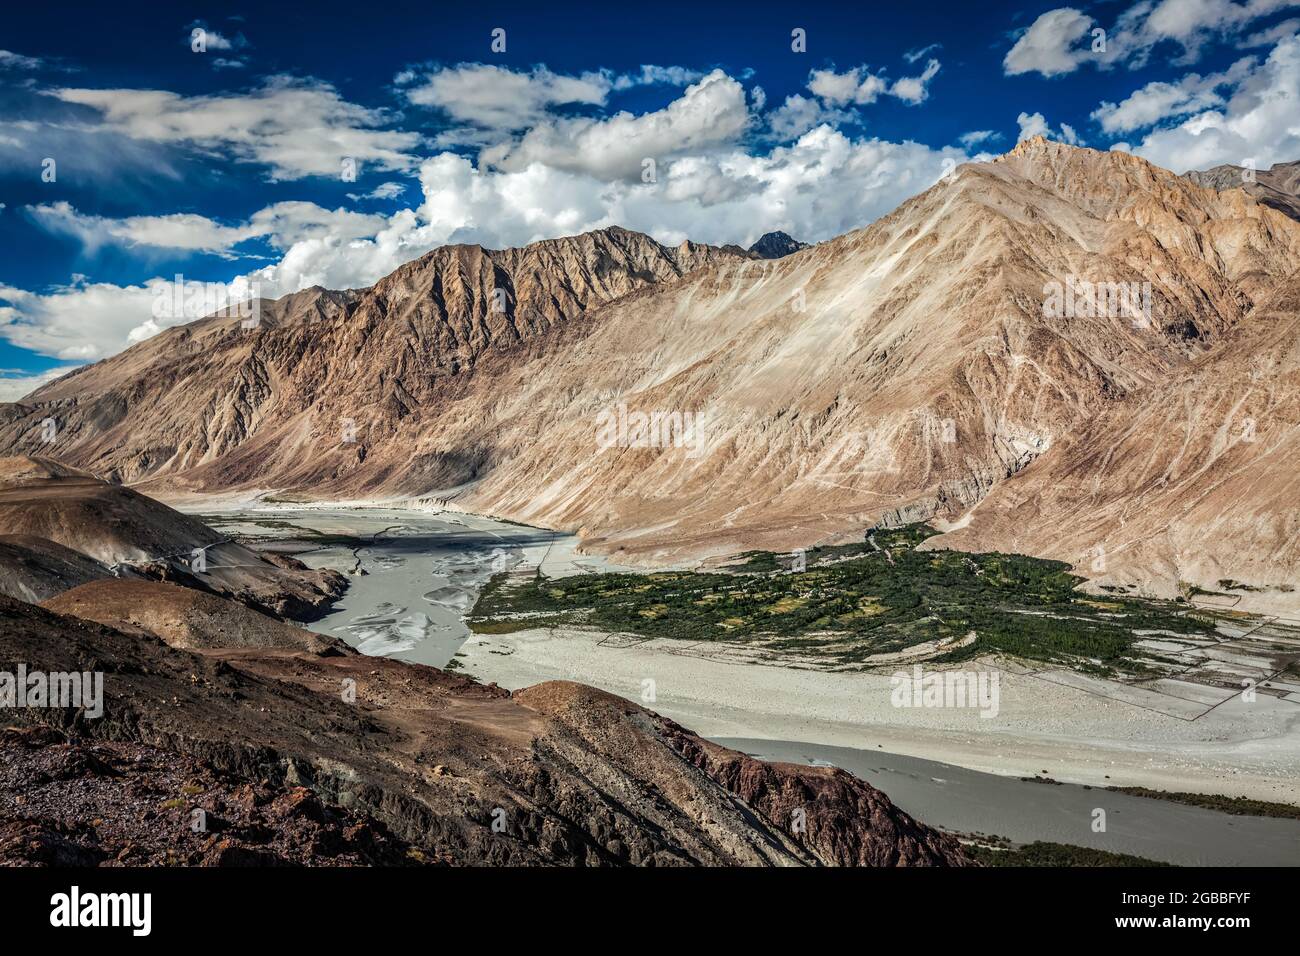 https://c8.alamy.com/comp/2GBBFYF/nubra-valley-in-himalayas-ladakh-india-2GBBFYF.jpg